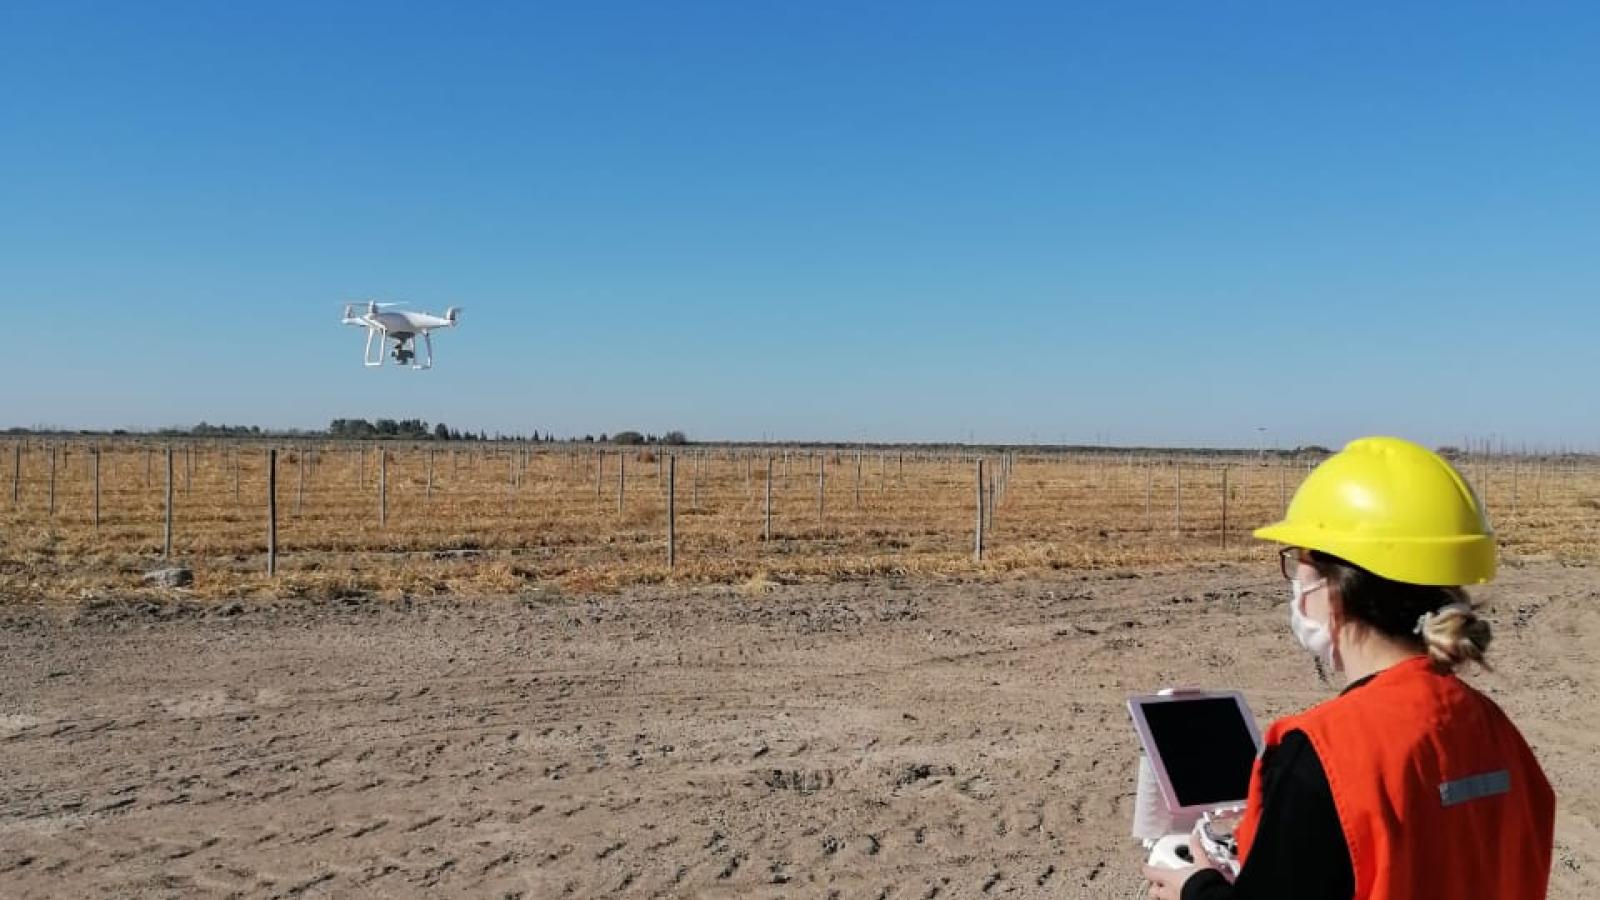 Drone survey at agricultural field - San Juan, Argentina